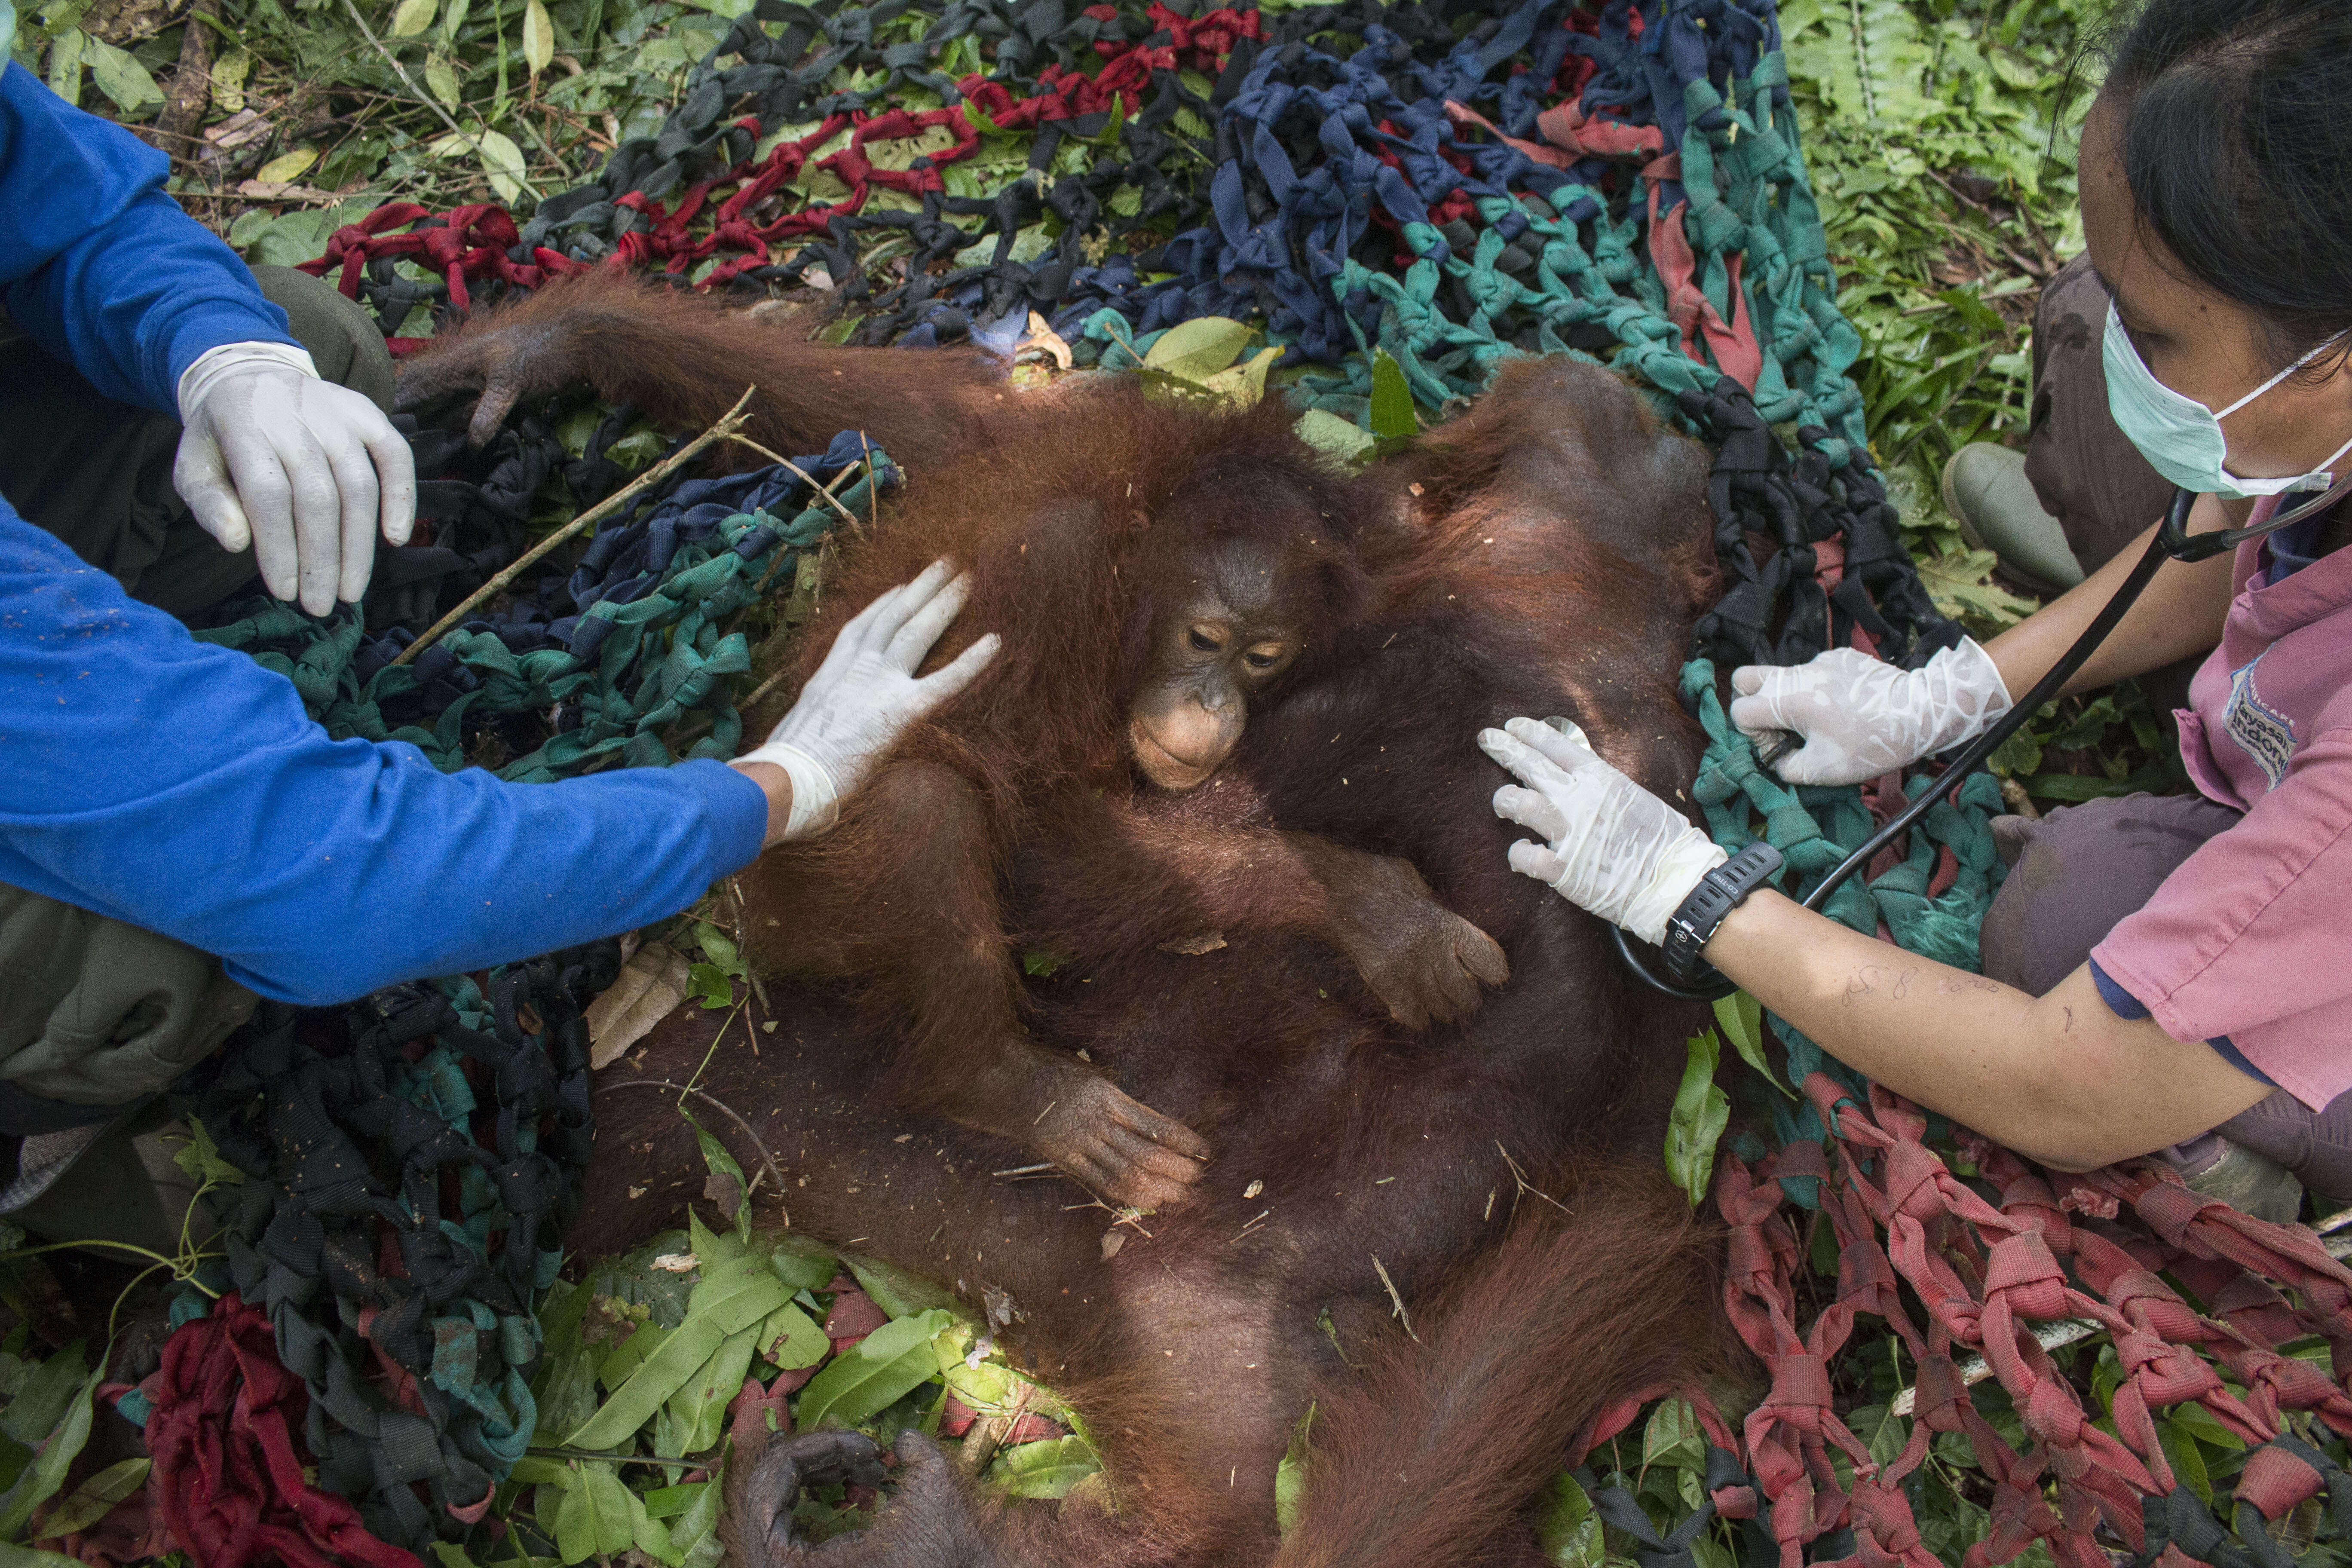 Baby orangutan clinging to her mother